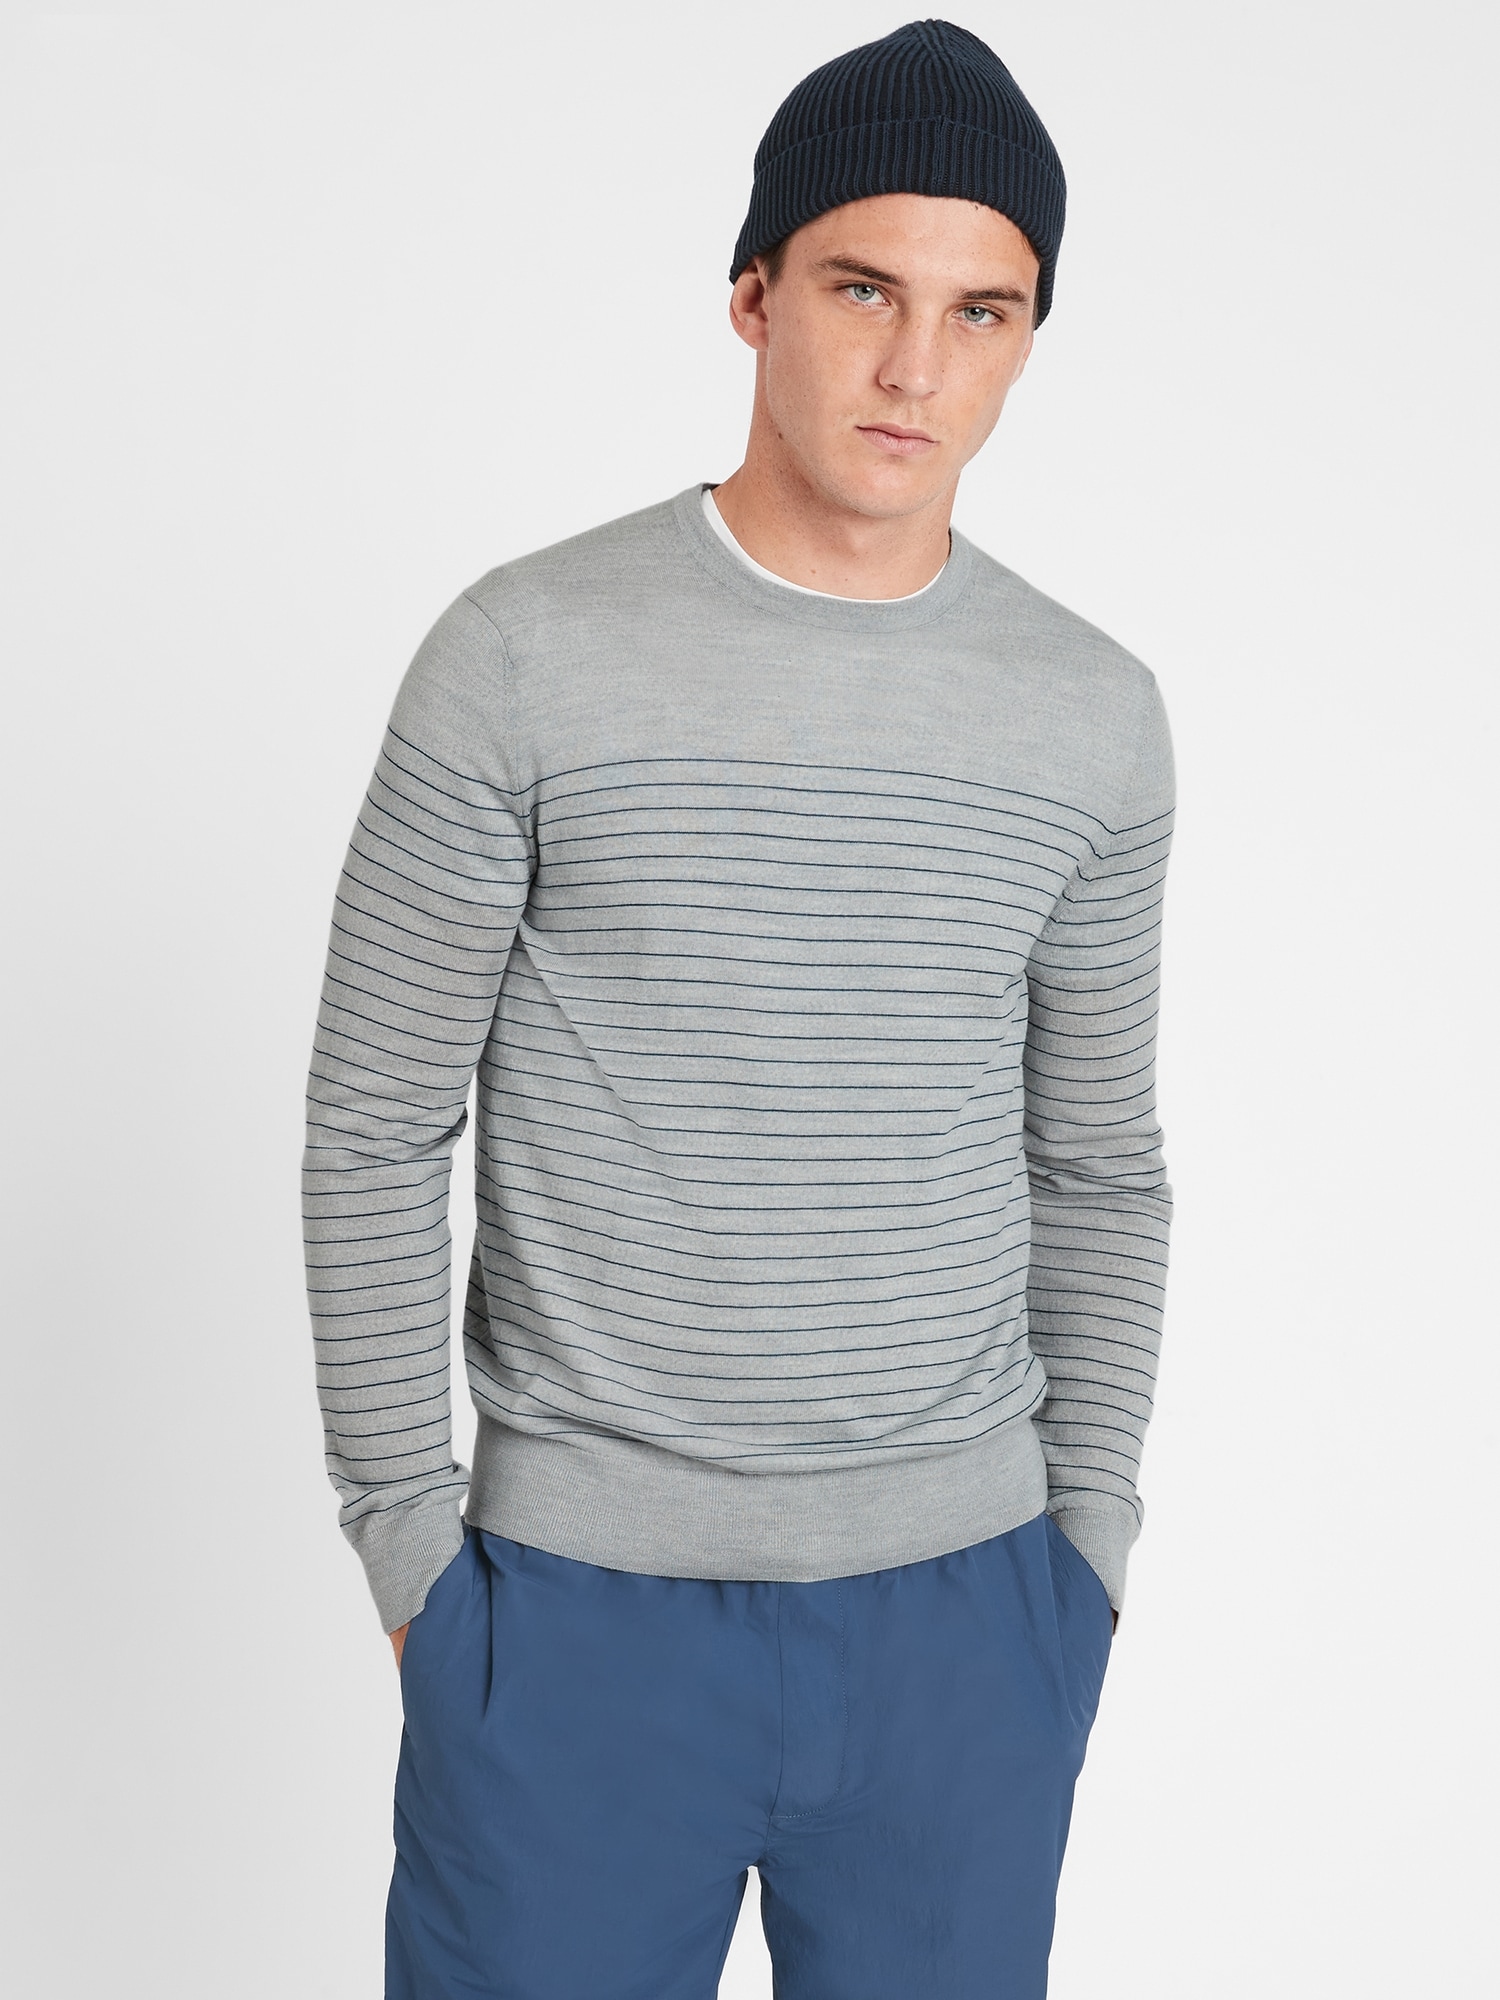 Merino Stripe Sweater in Responsible Wool